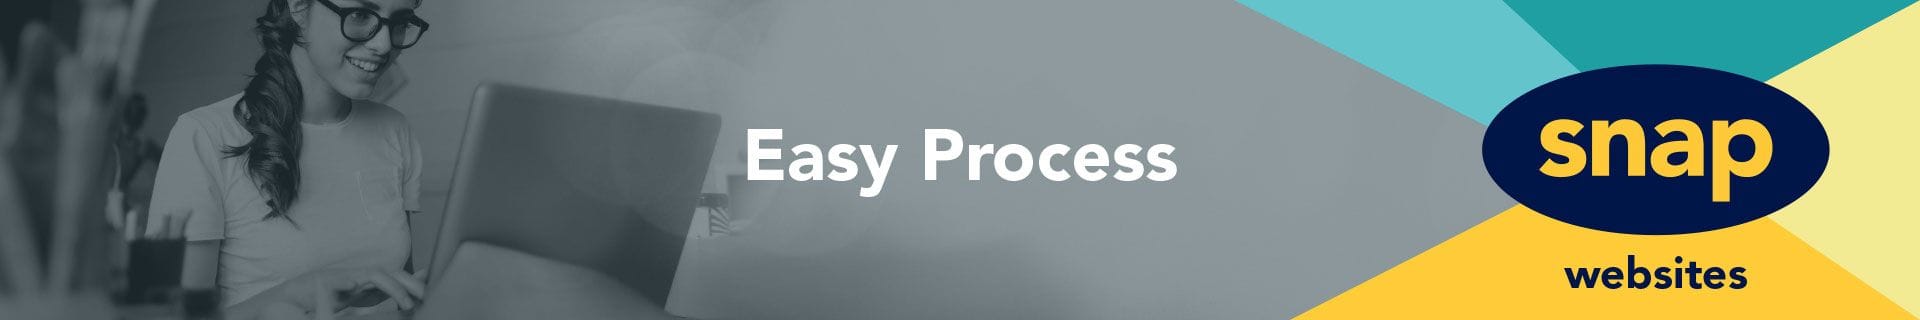 Websites Easy Process